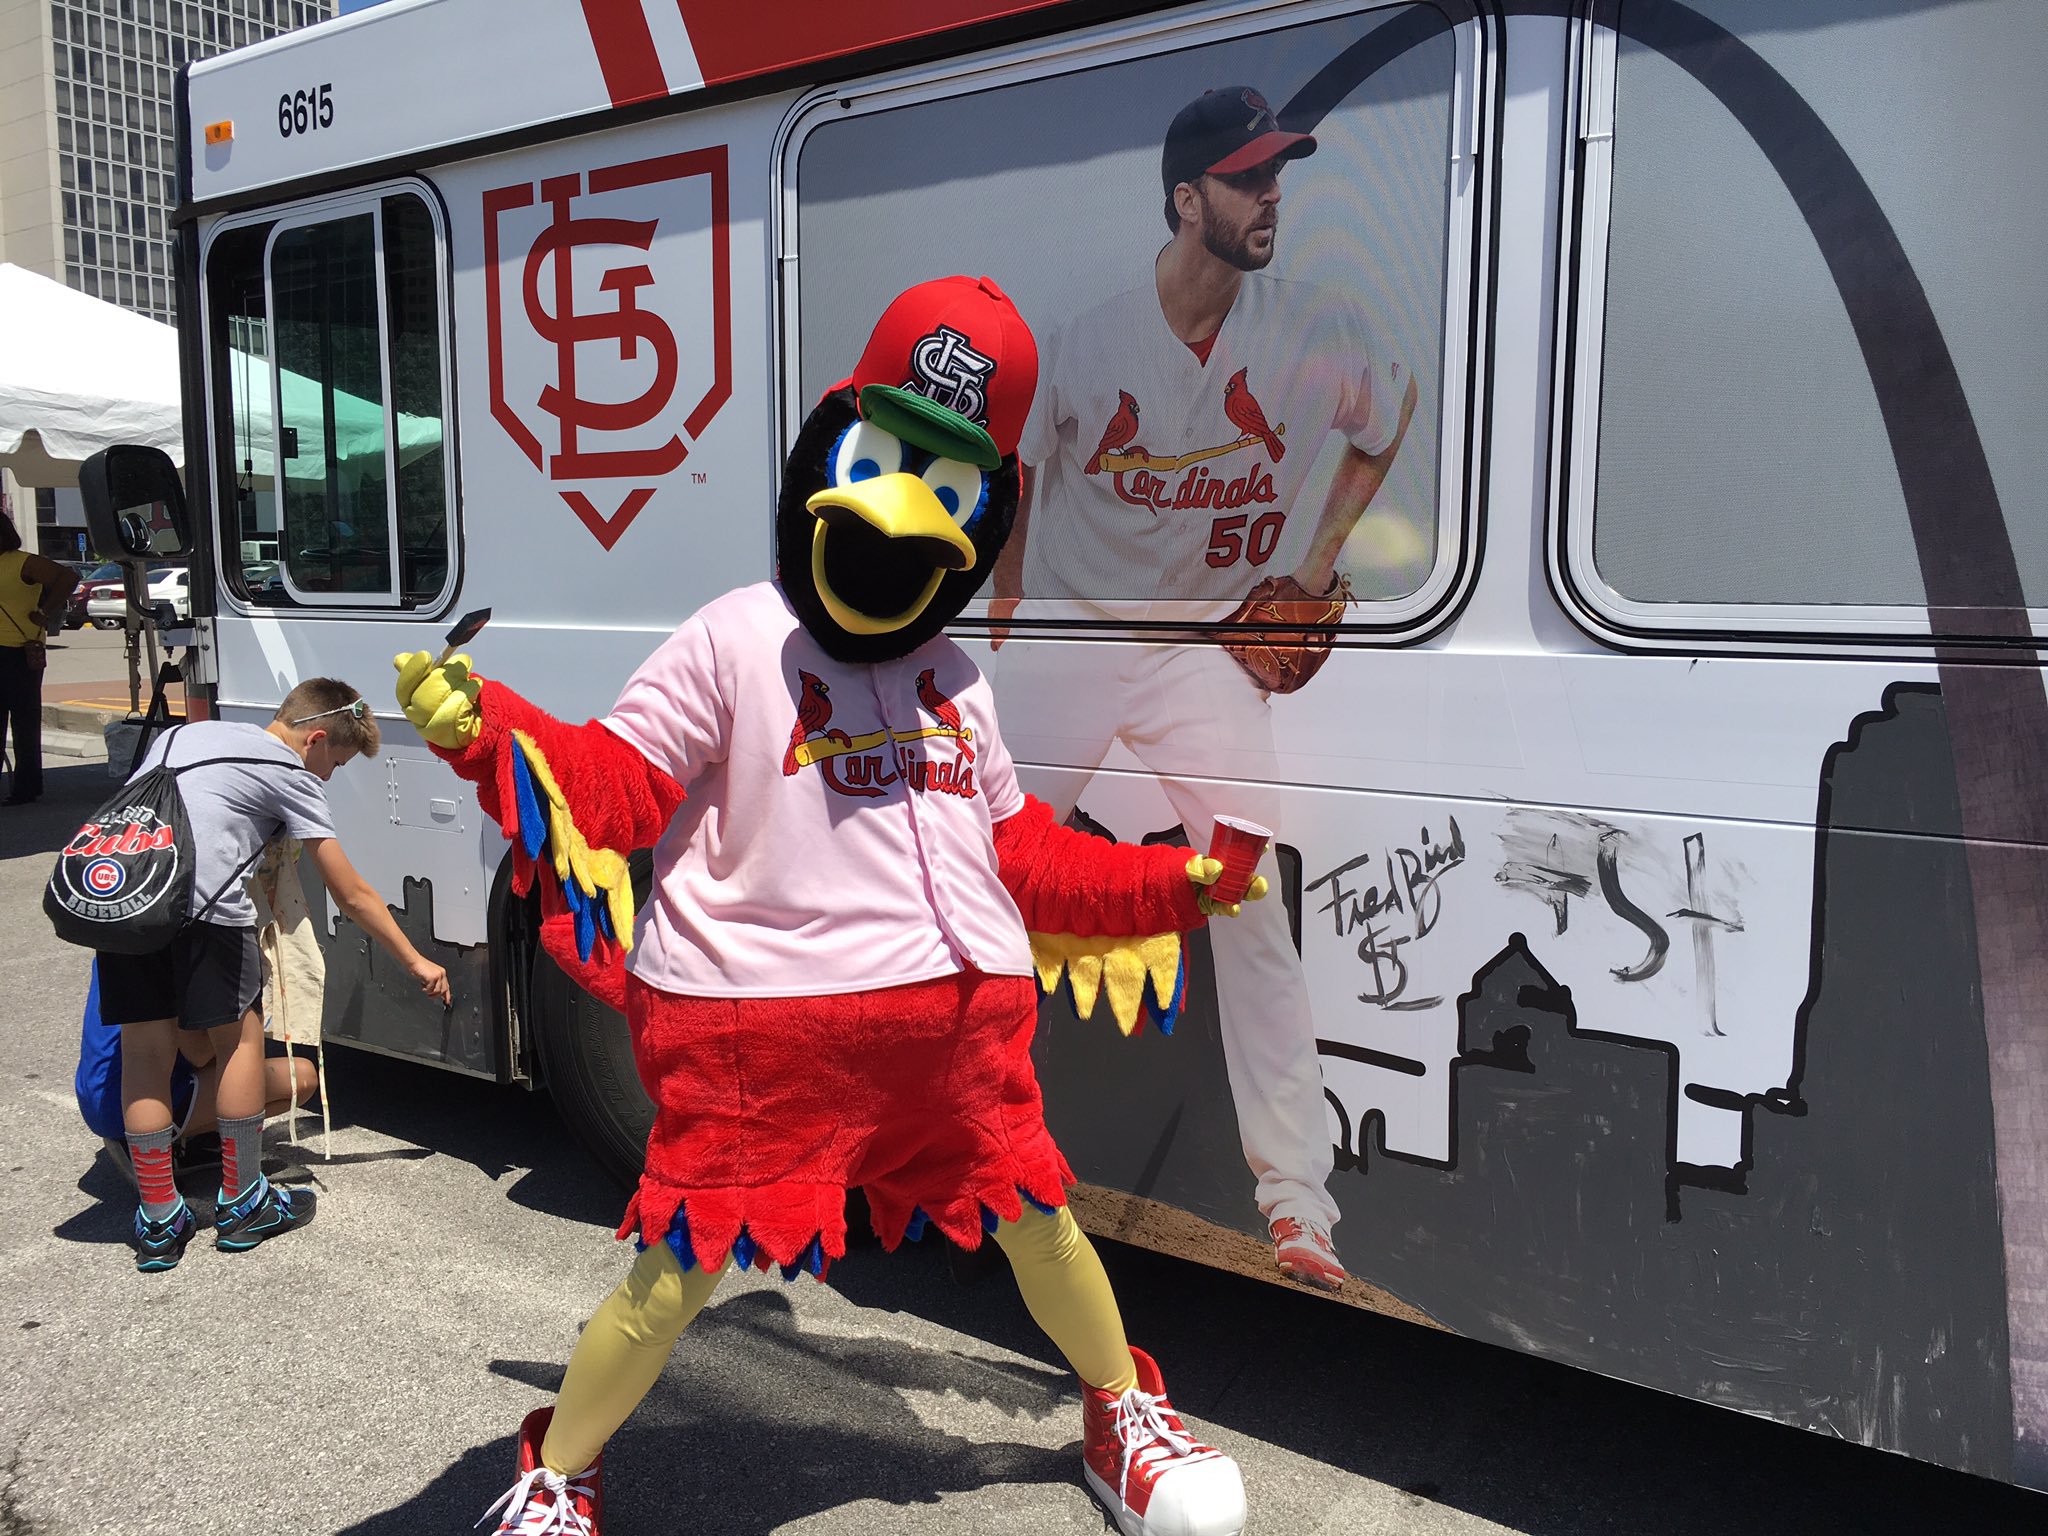 Metro, St. Louis Cardinals Team Up to Paint Bus at Busch Stadium